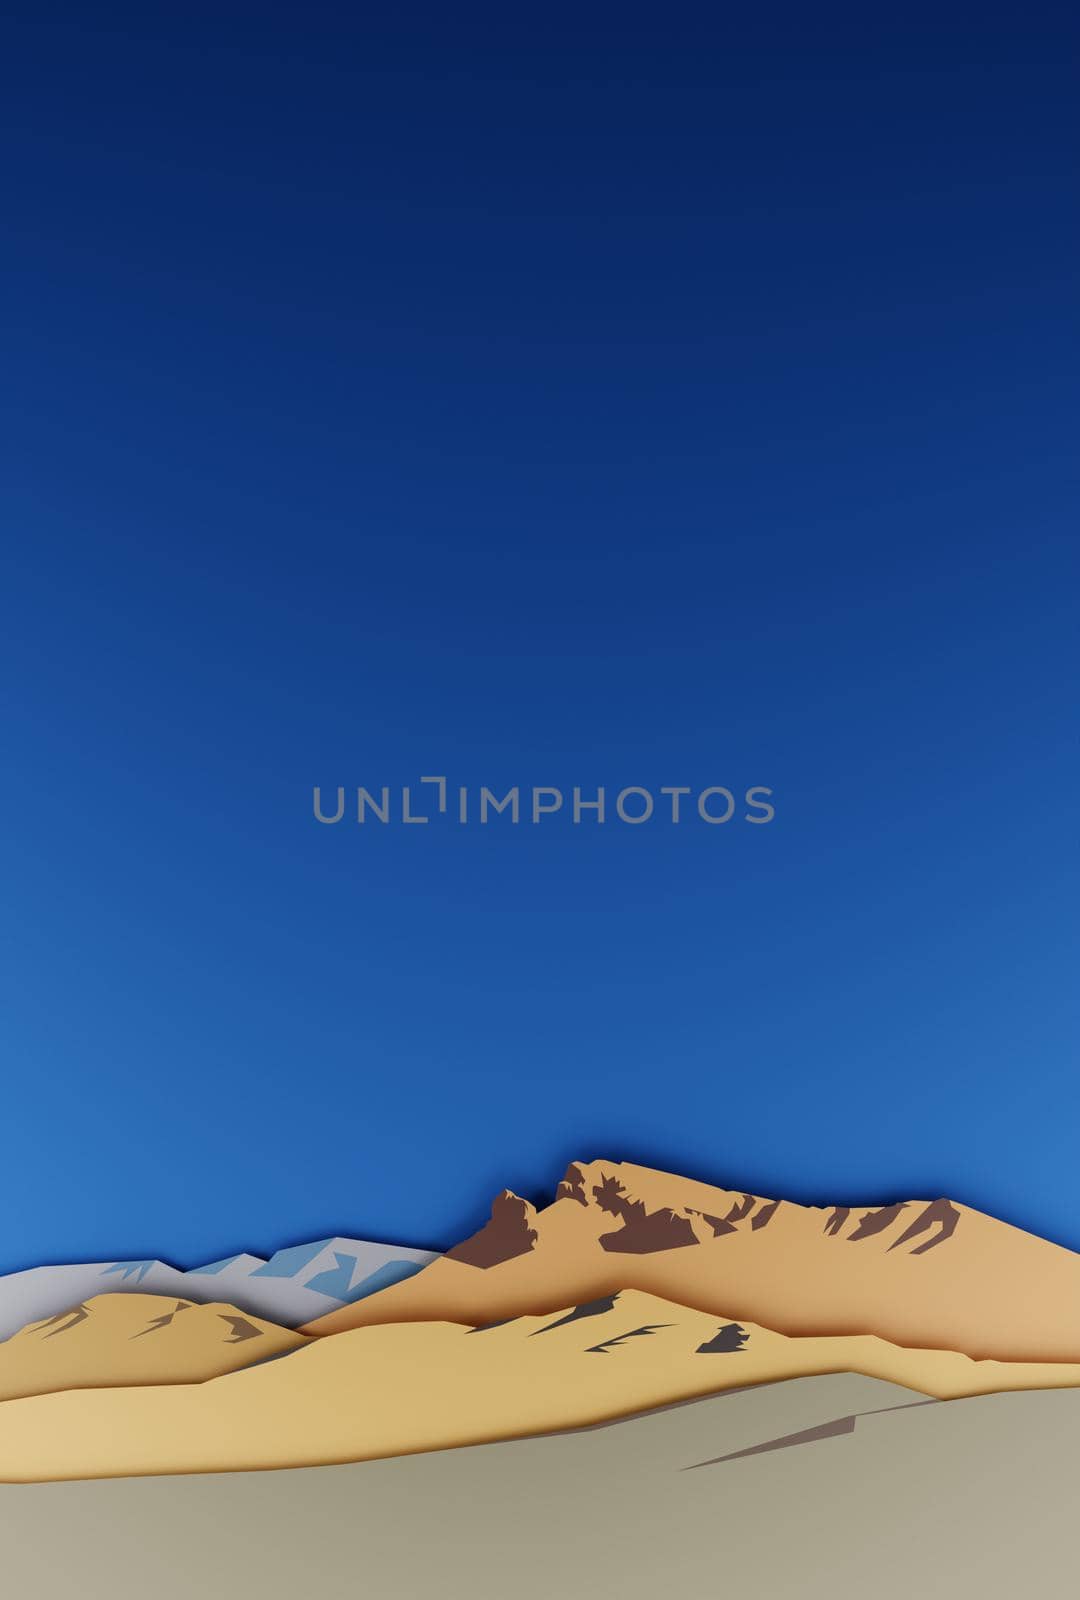 Desert mountains with blue sky. Papercut design, digital render.